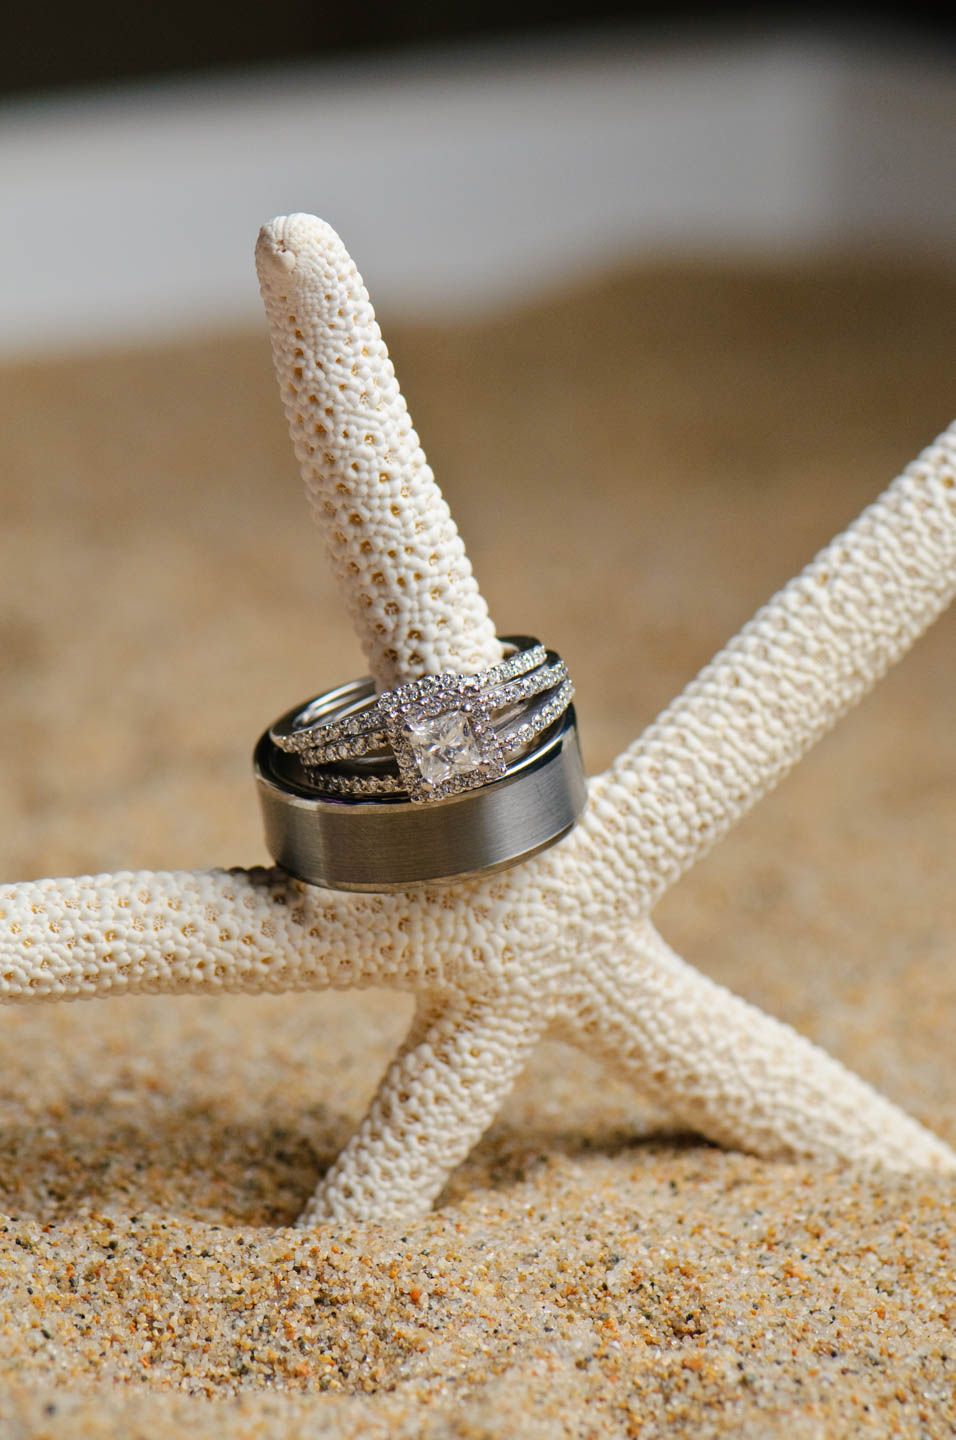 Beach inspired wedding rings